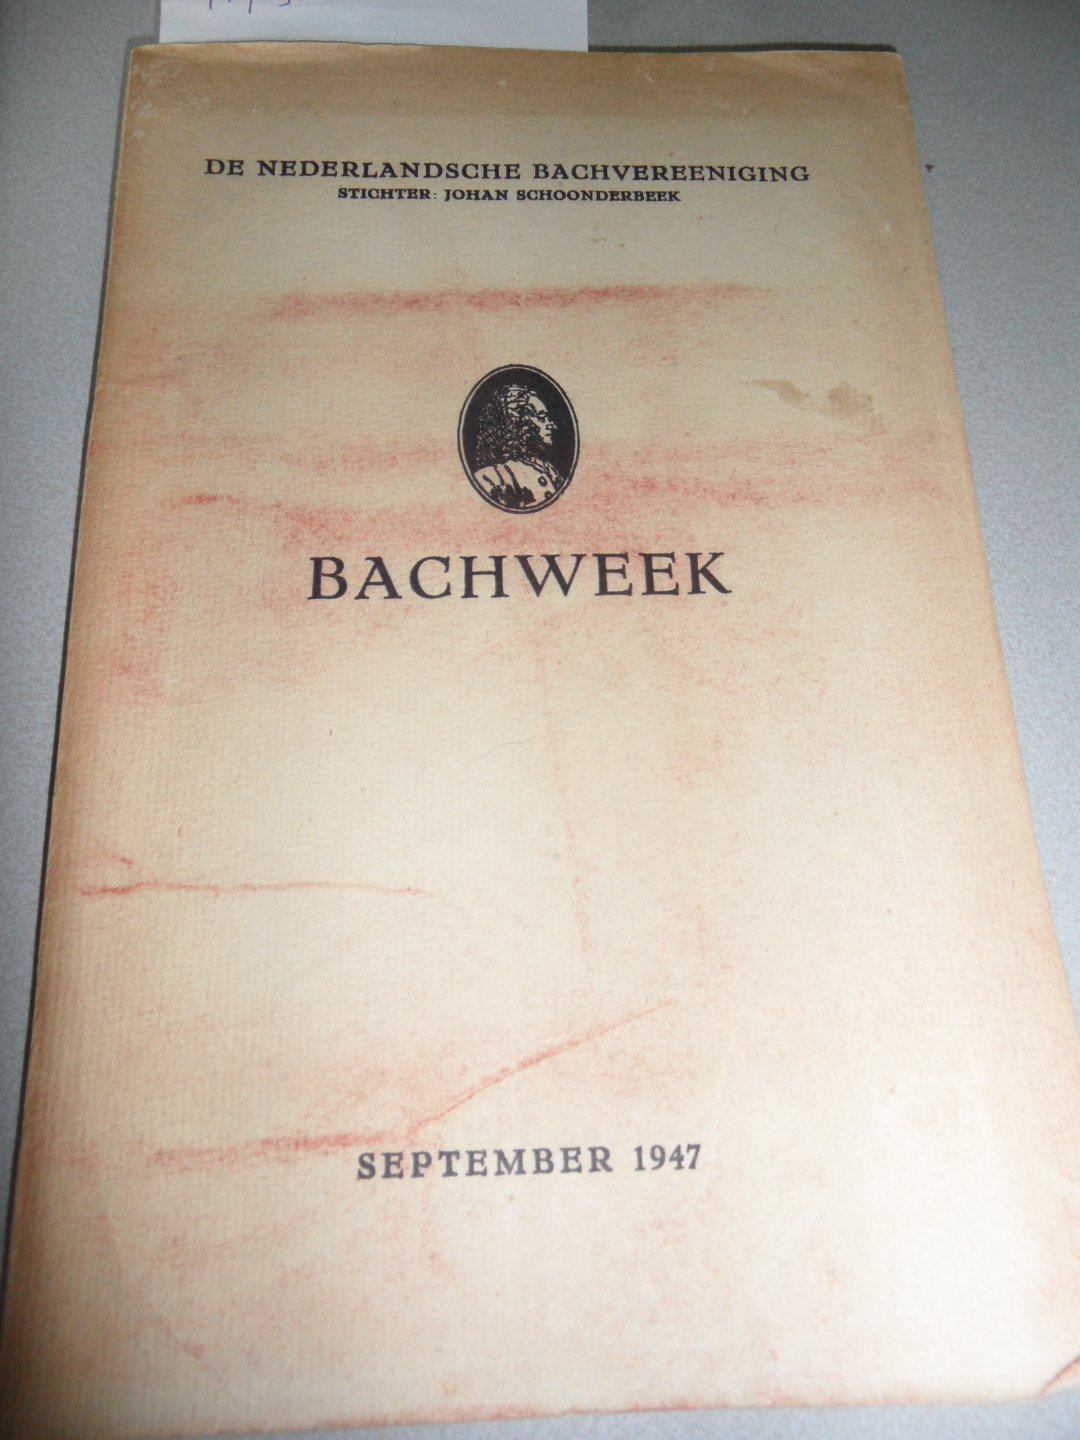 De Nederlandsche Bachvereeniging - Bachweek 1947